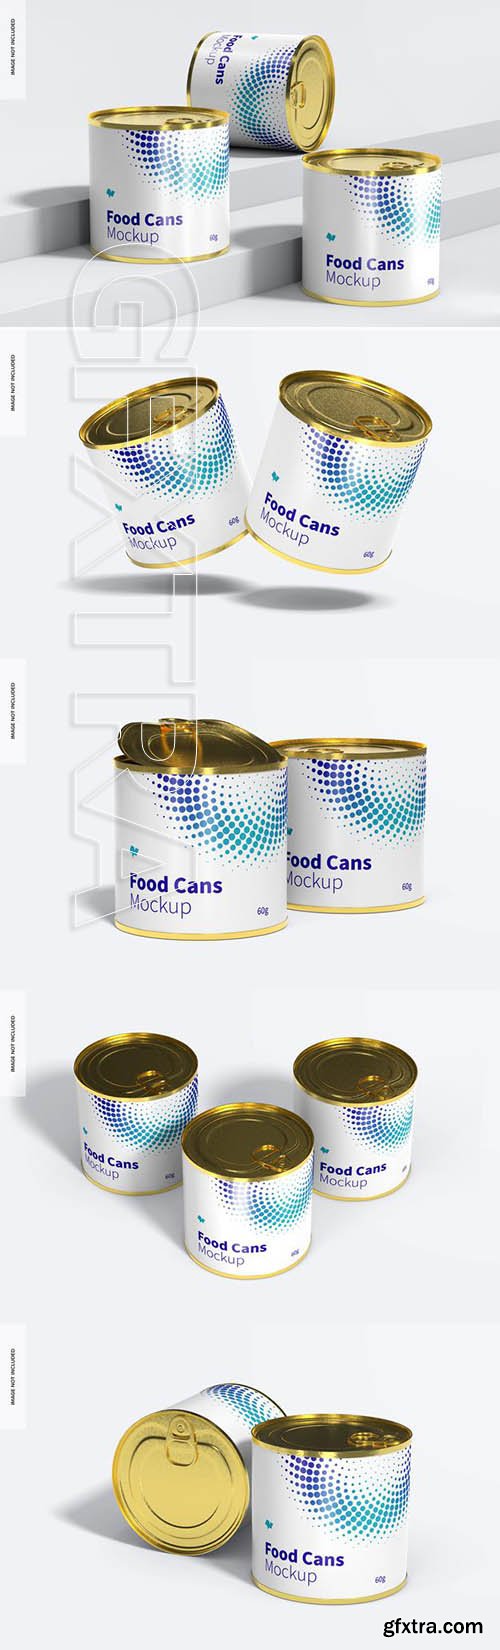 60g food cans mockup